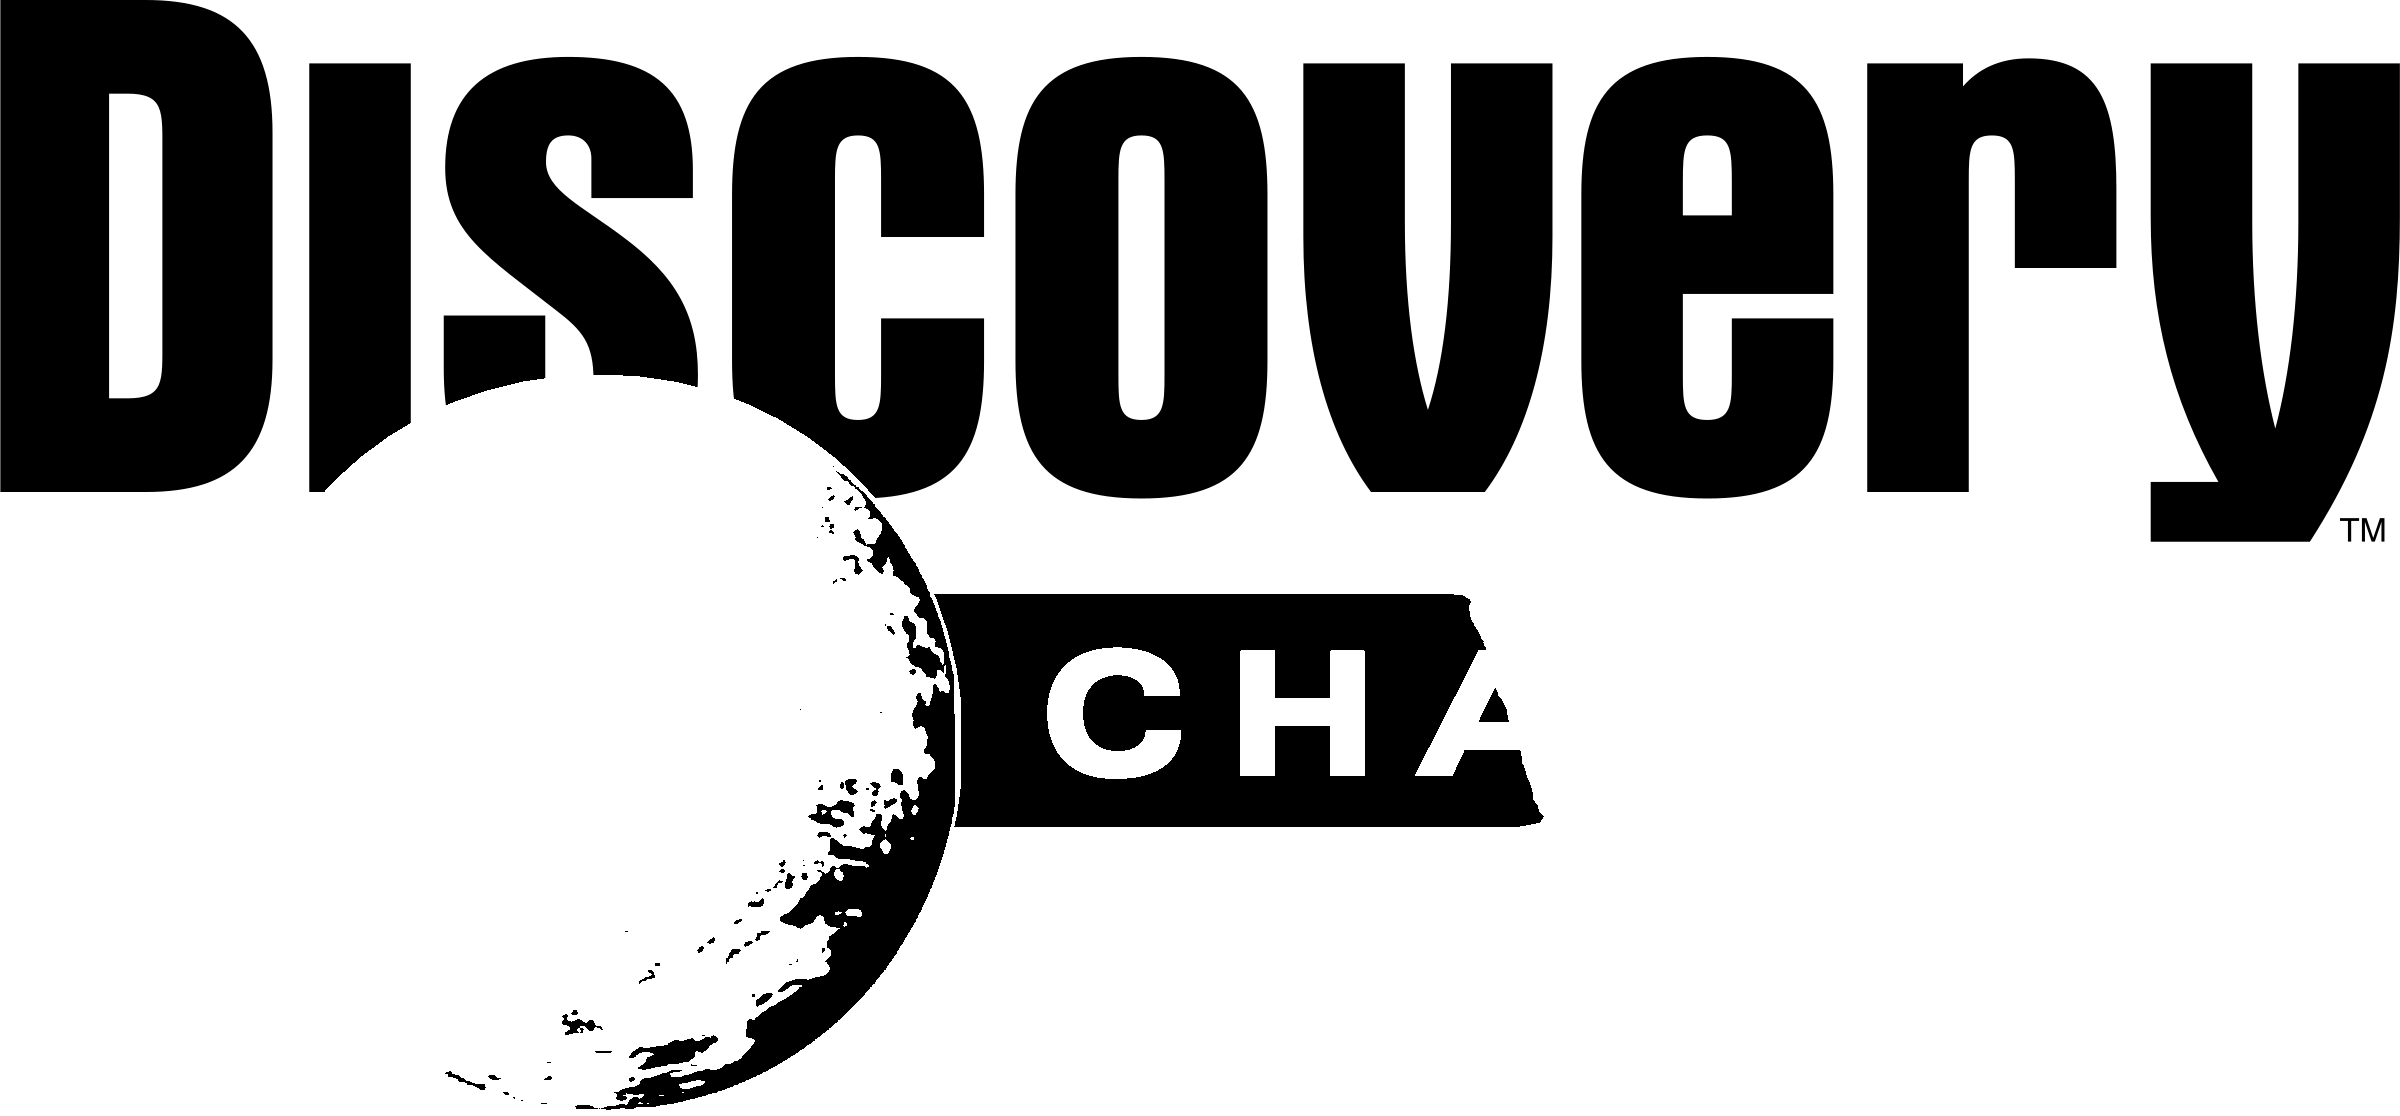 Discovery Channel Logo - Discovery Channel Logo PNG Transparent & SVG Vector - Freebie Supply